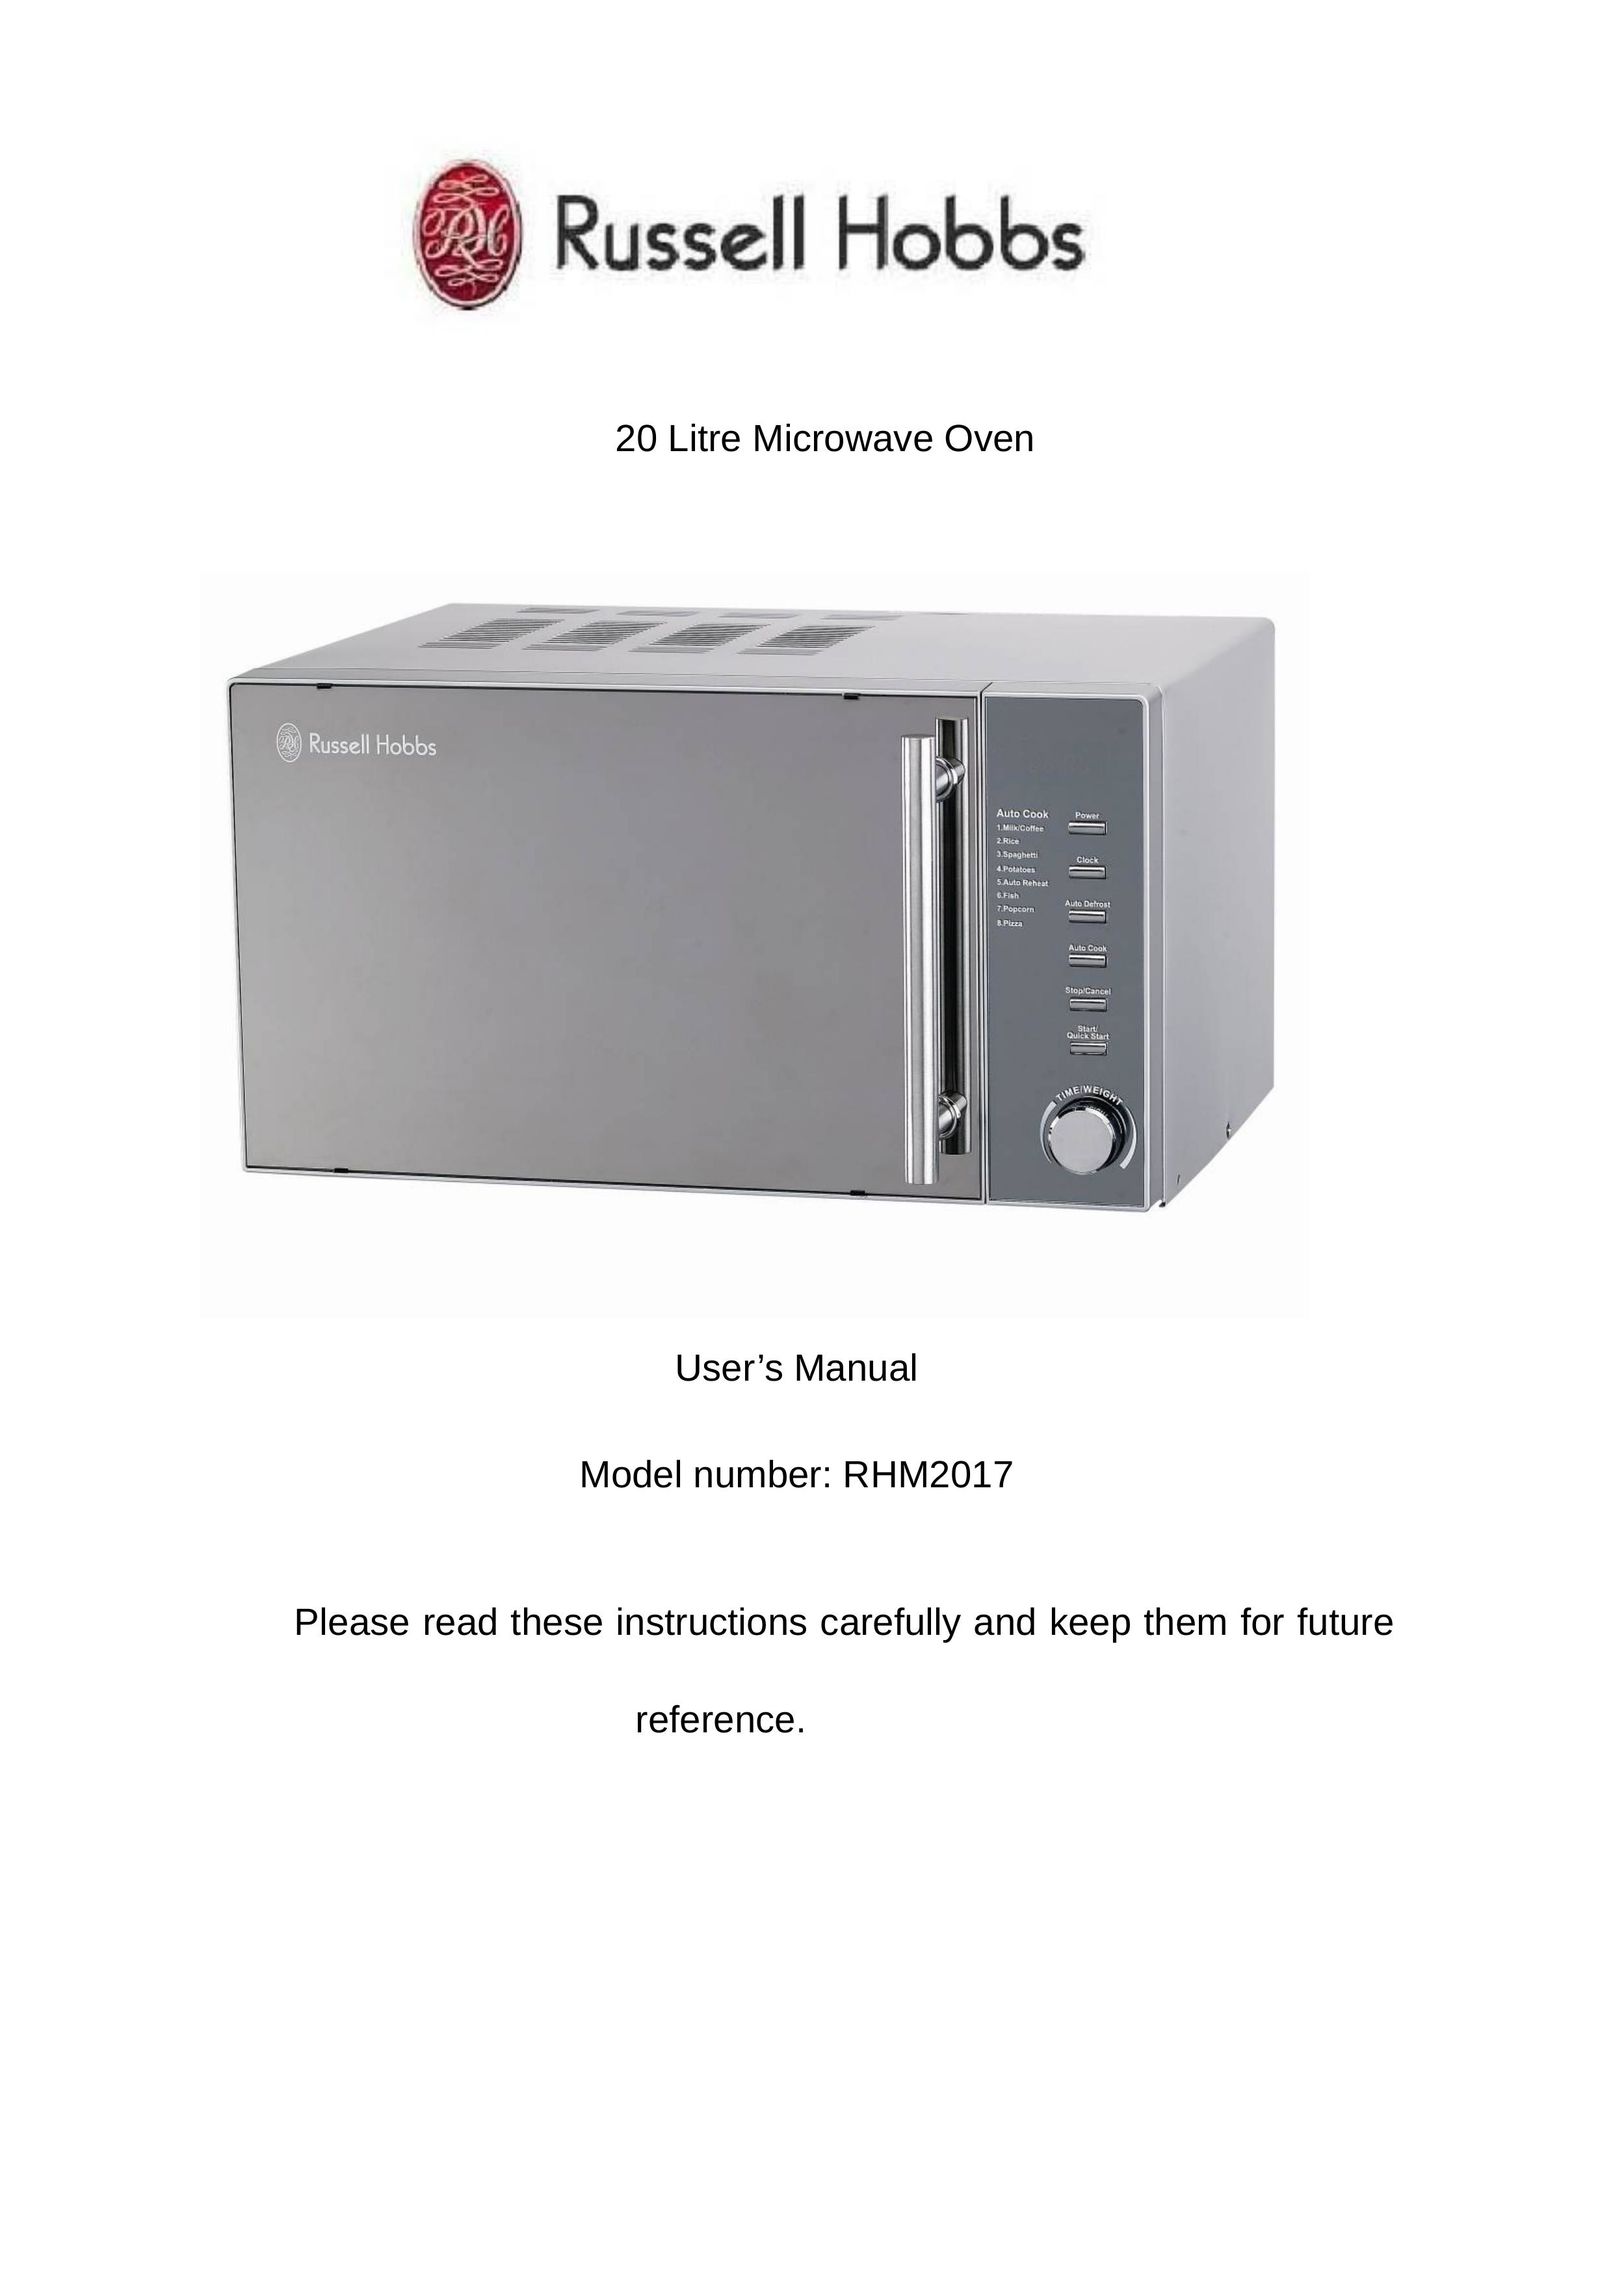 Russell Hobbs RHM2017 Microwave Oven User Manual